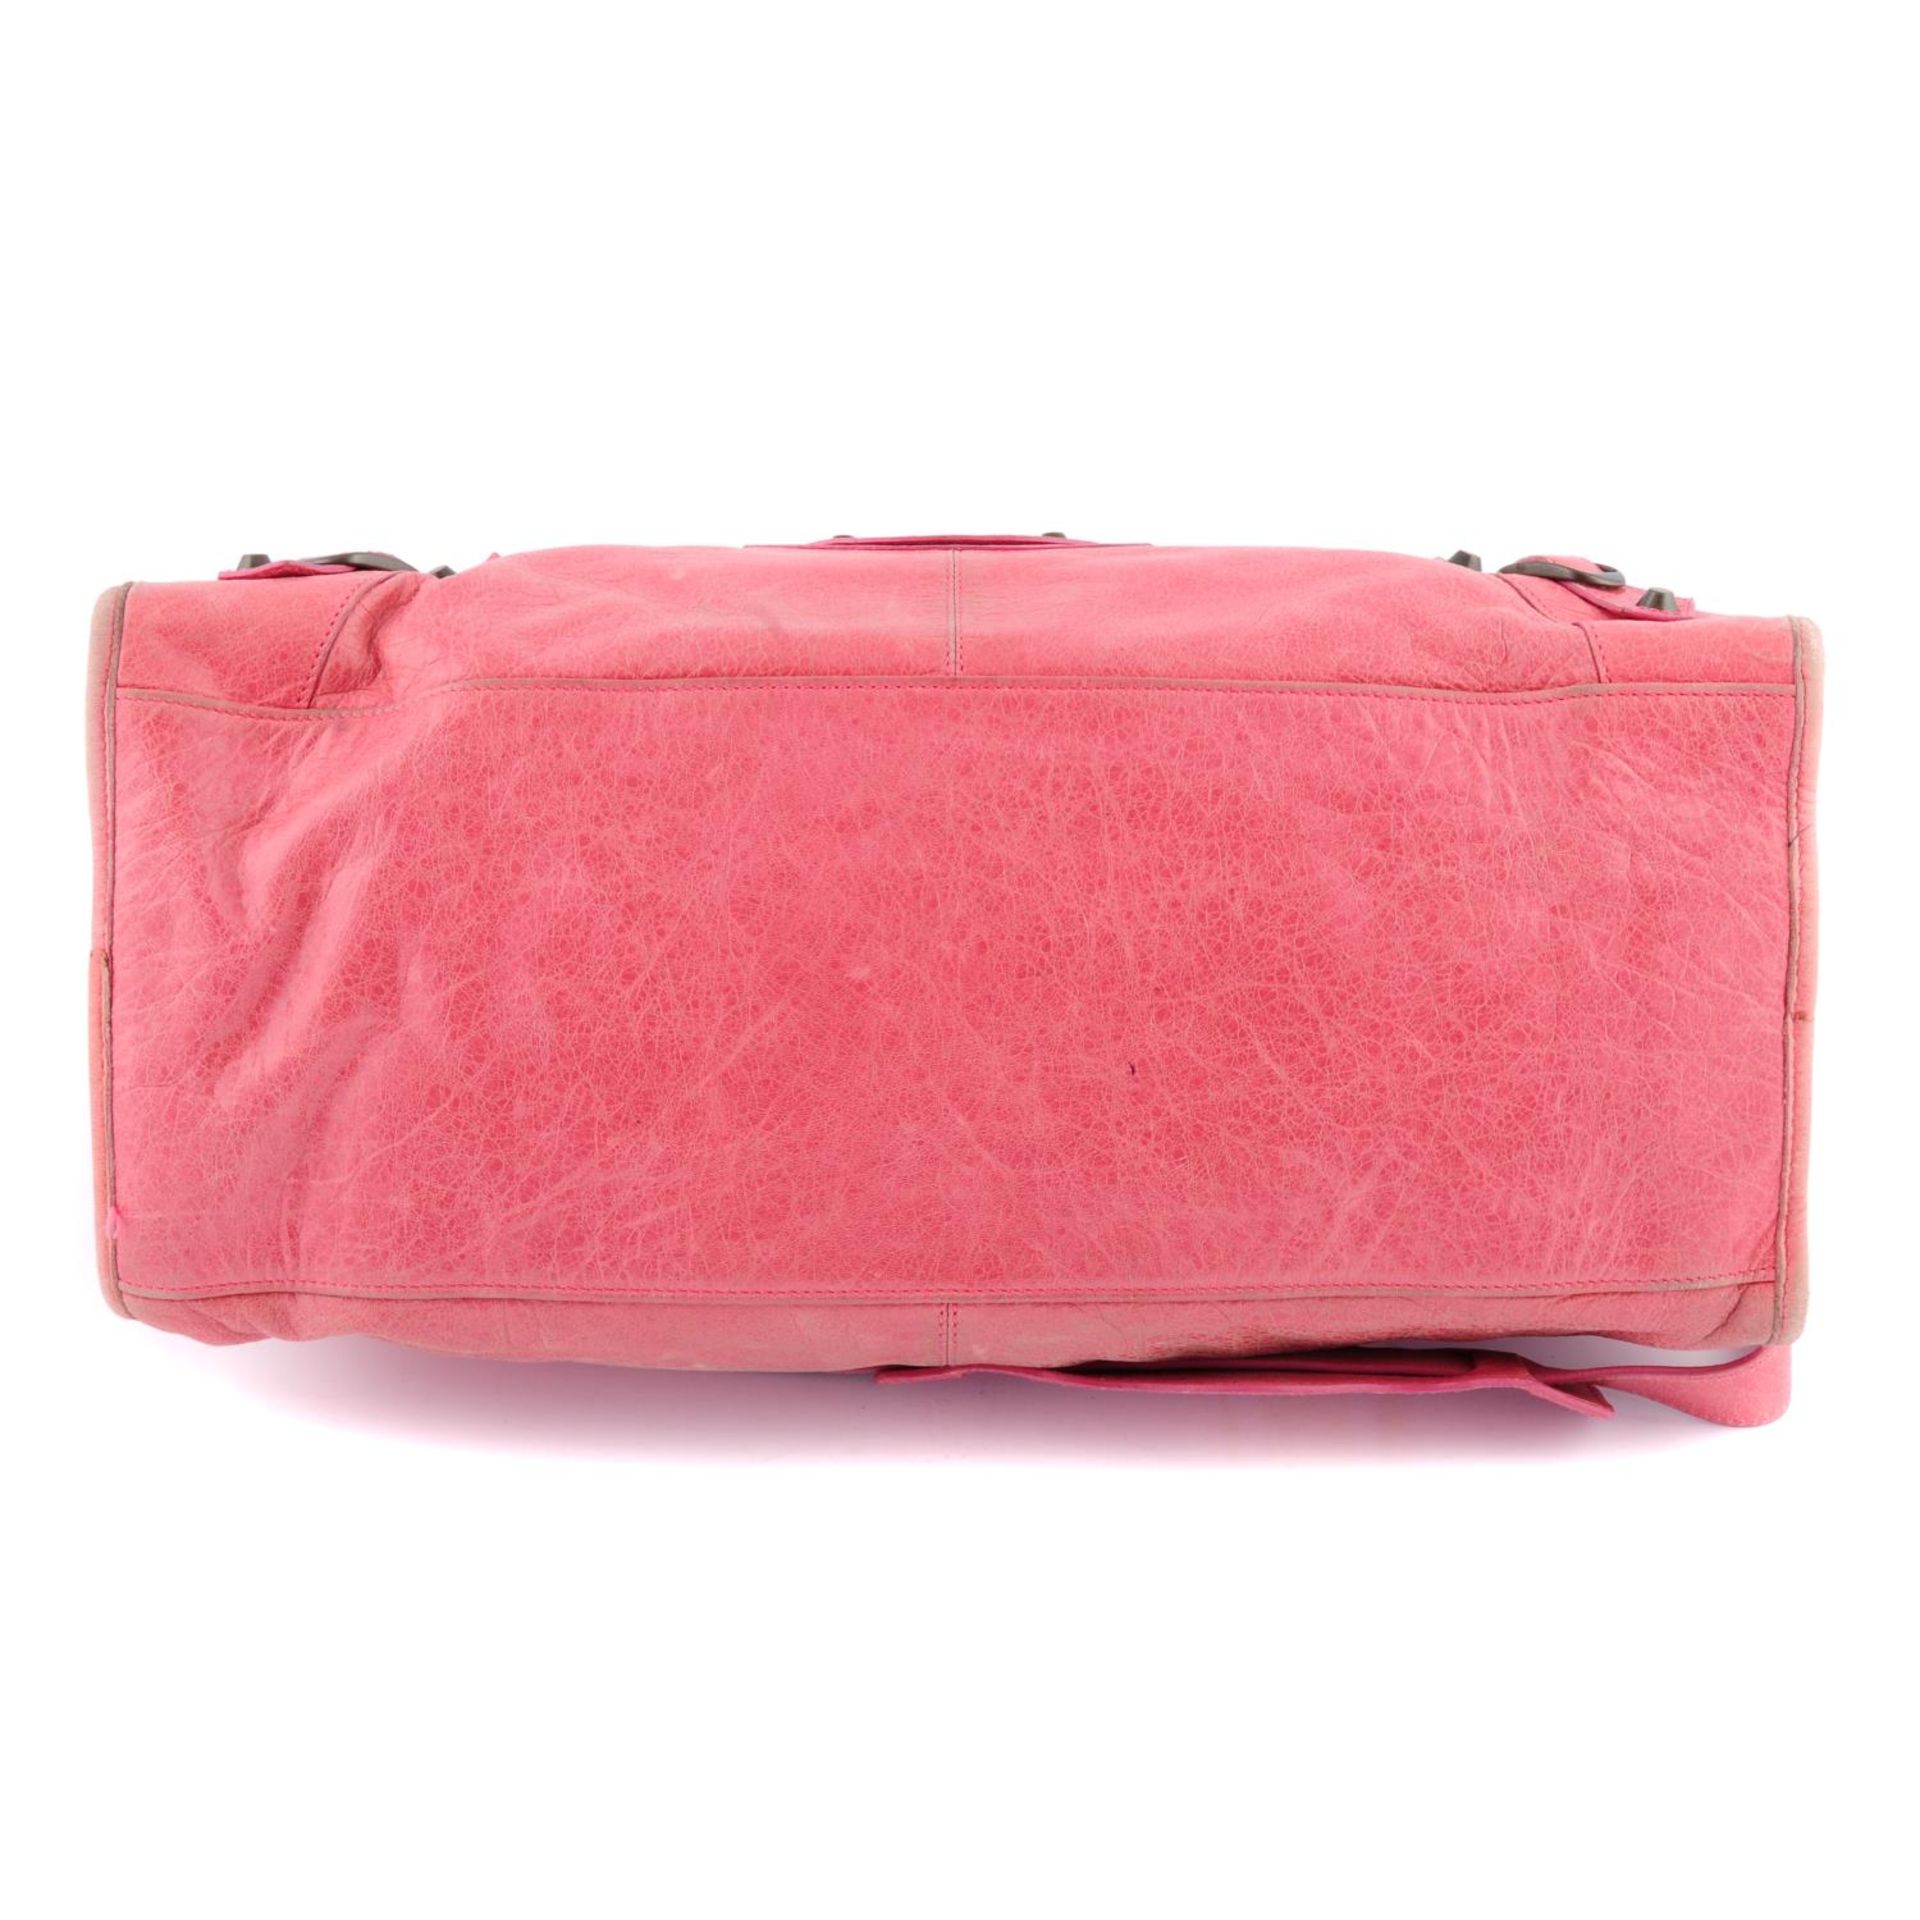 BALENCIAGA - a grenadine pink leather Part-Time handbag. - Image 5 of 6